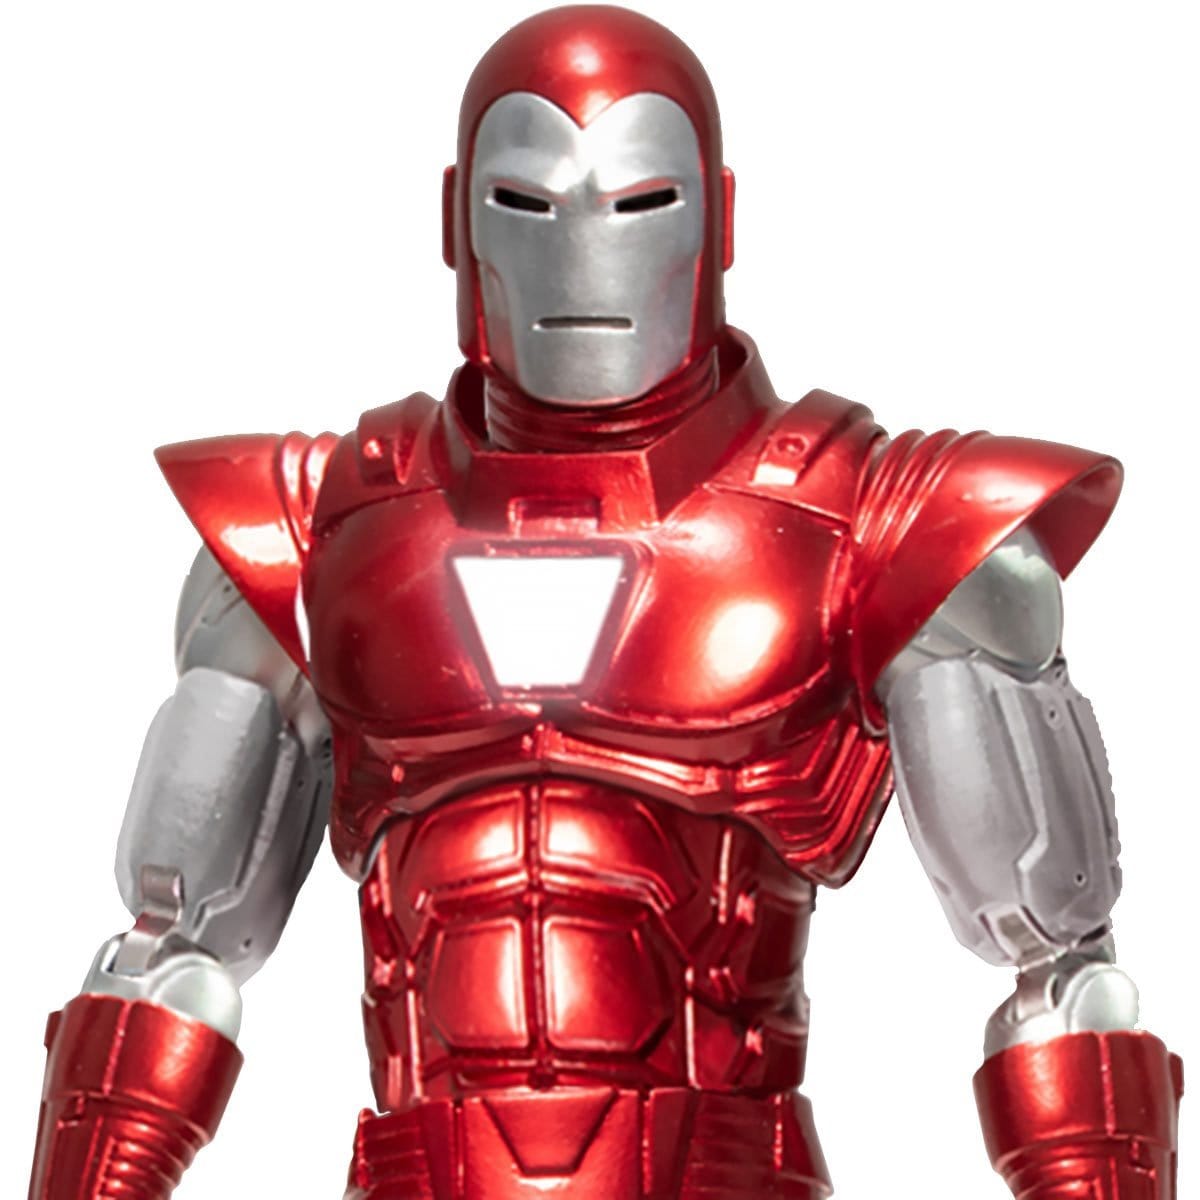 Mezco Toyz One:12 Collective Marvel Iron Man: Silver Centurion Action Figure